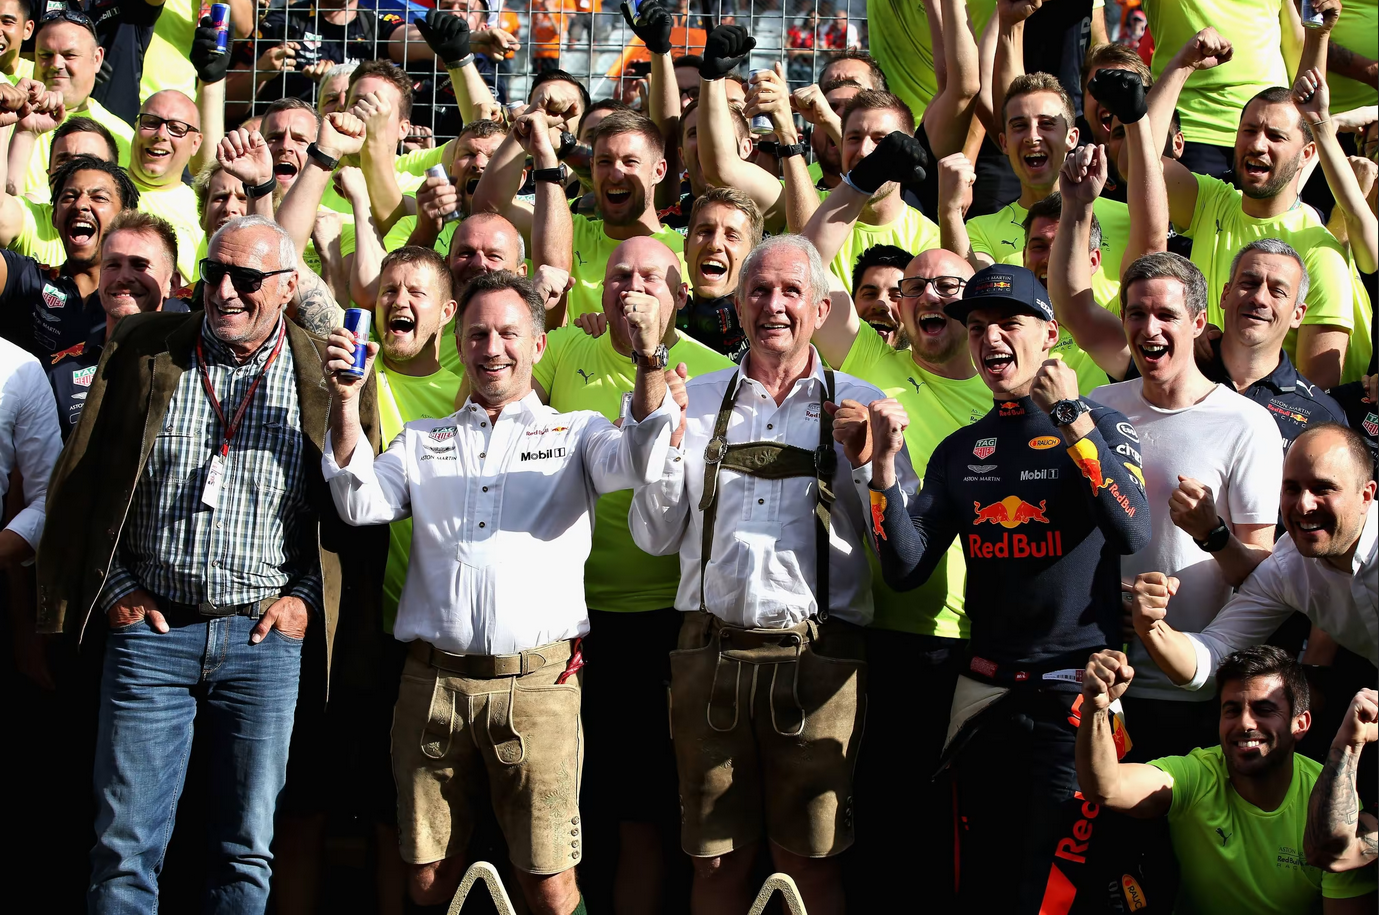 Red Bull team celebrate Austrain GP win